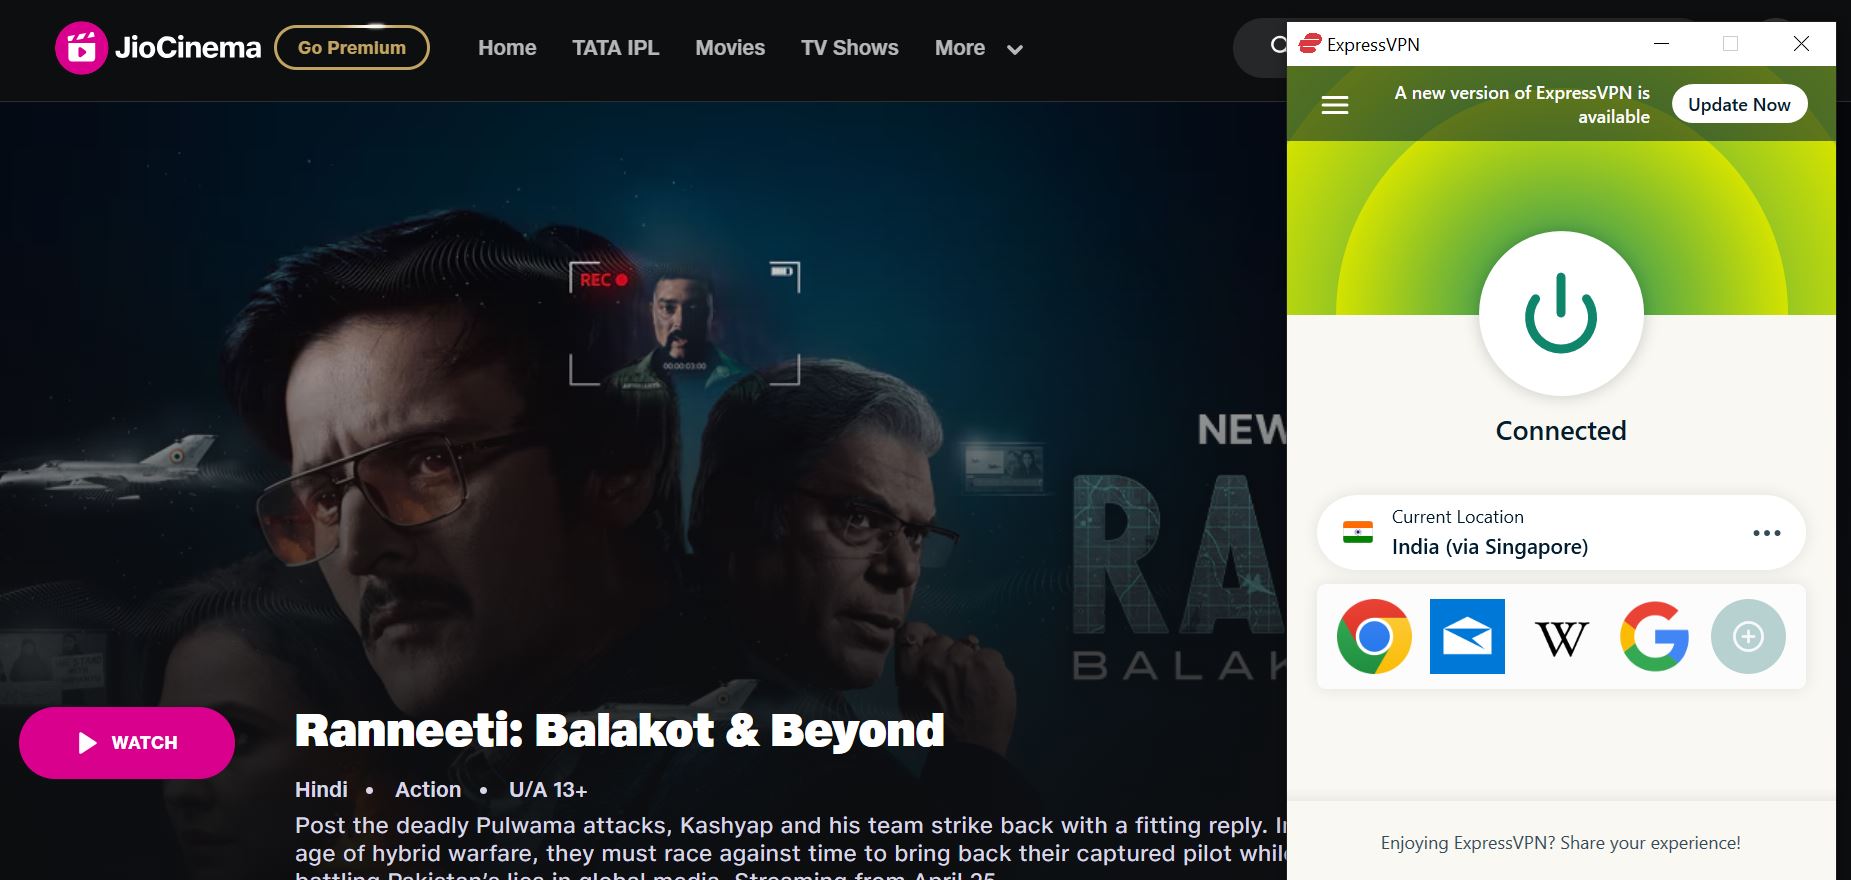 How to watch Ranneeti: Balakot & Beyond in USA?